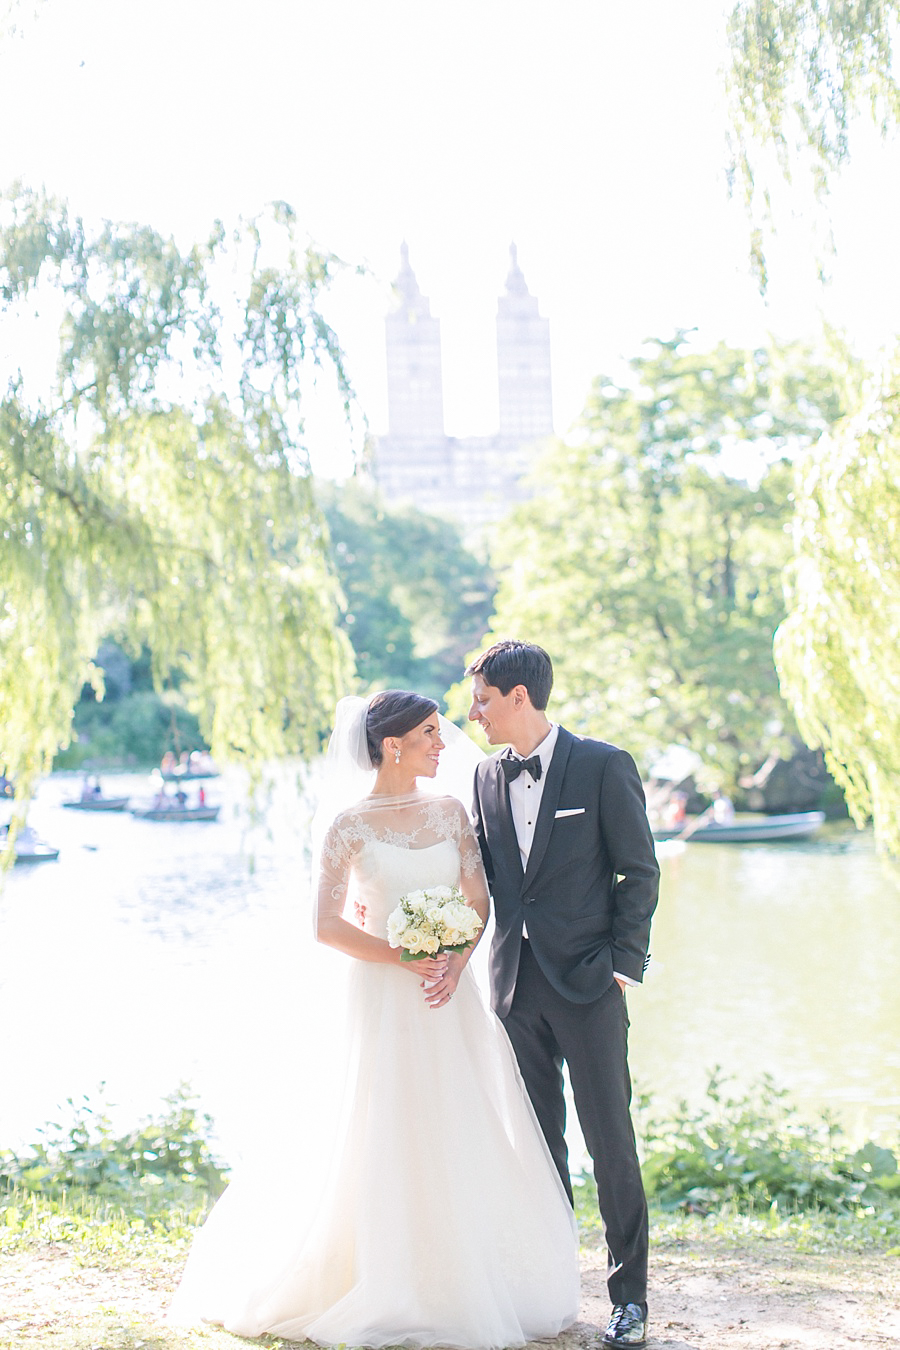 Central Park Boathouse Wedding Photos - Amy Rizzuto Photography-57